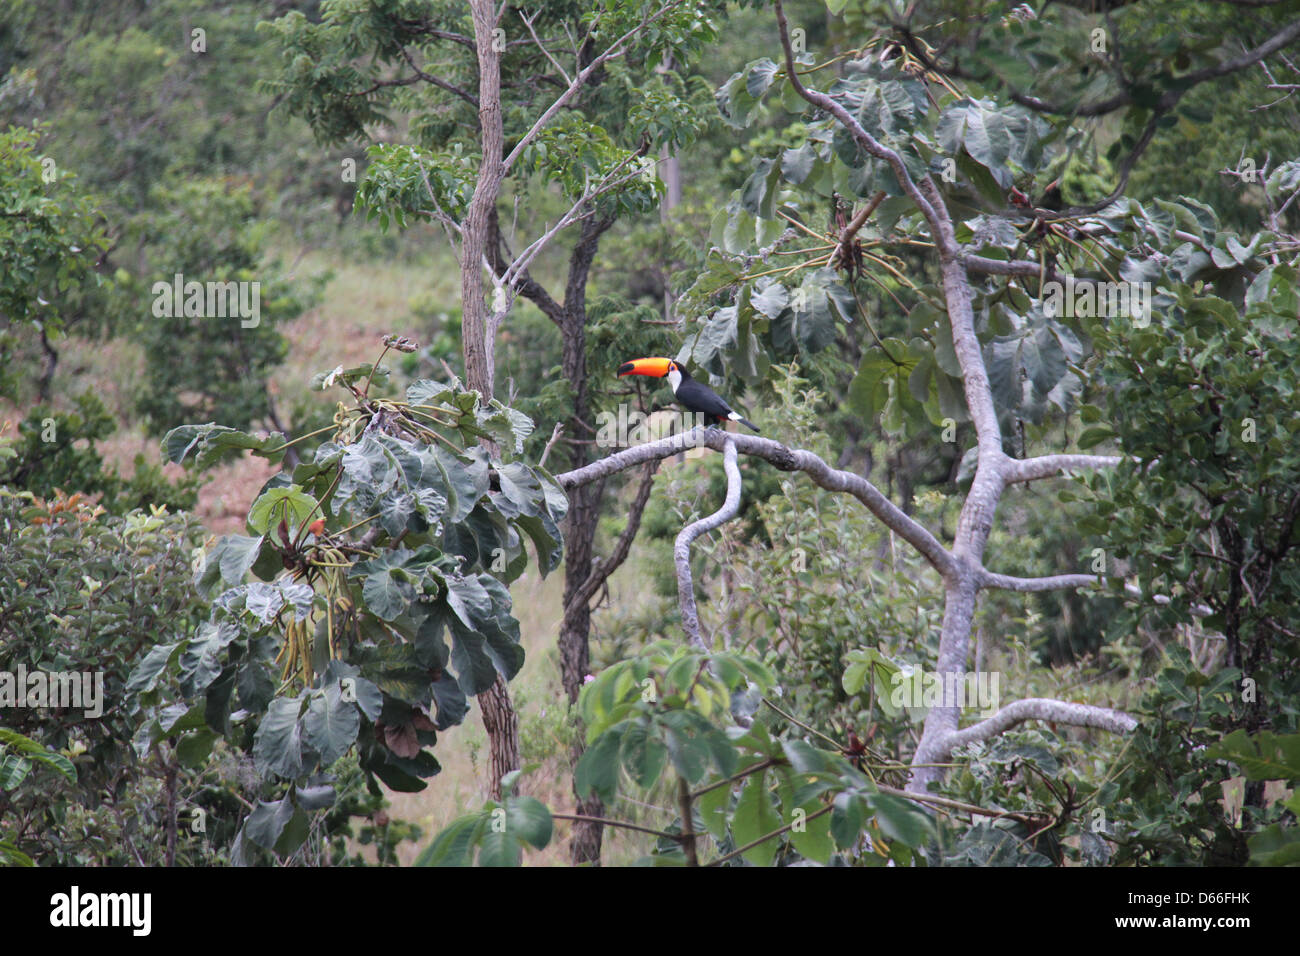 Toucan bird at a tree in the Chapada dos Veadeiros region Stock Photo